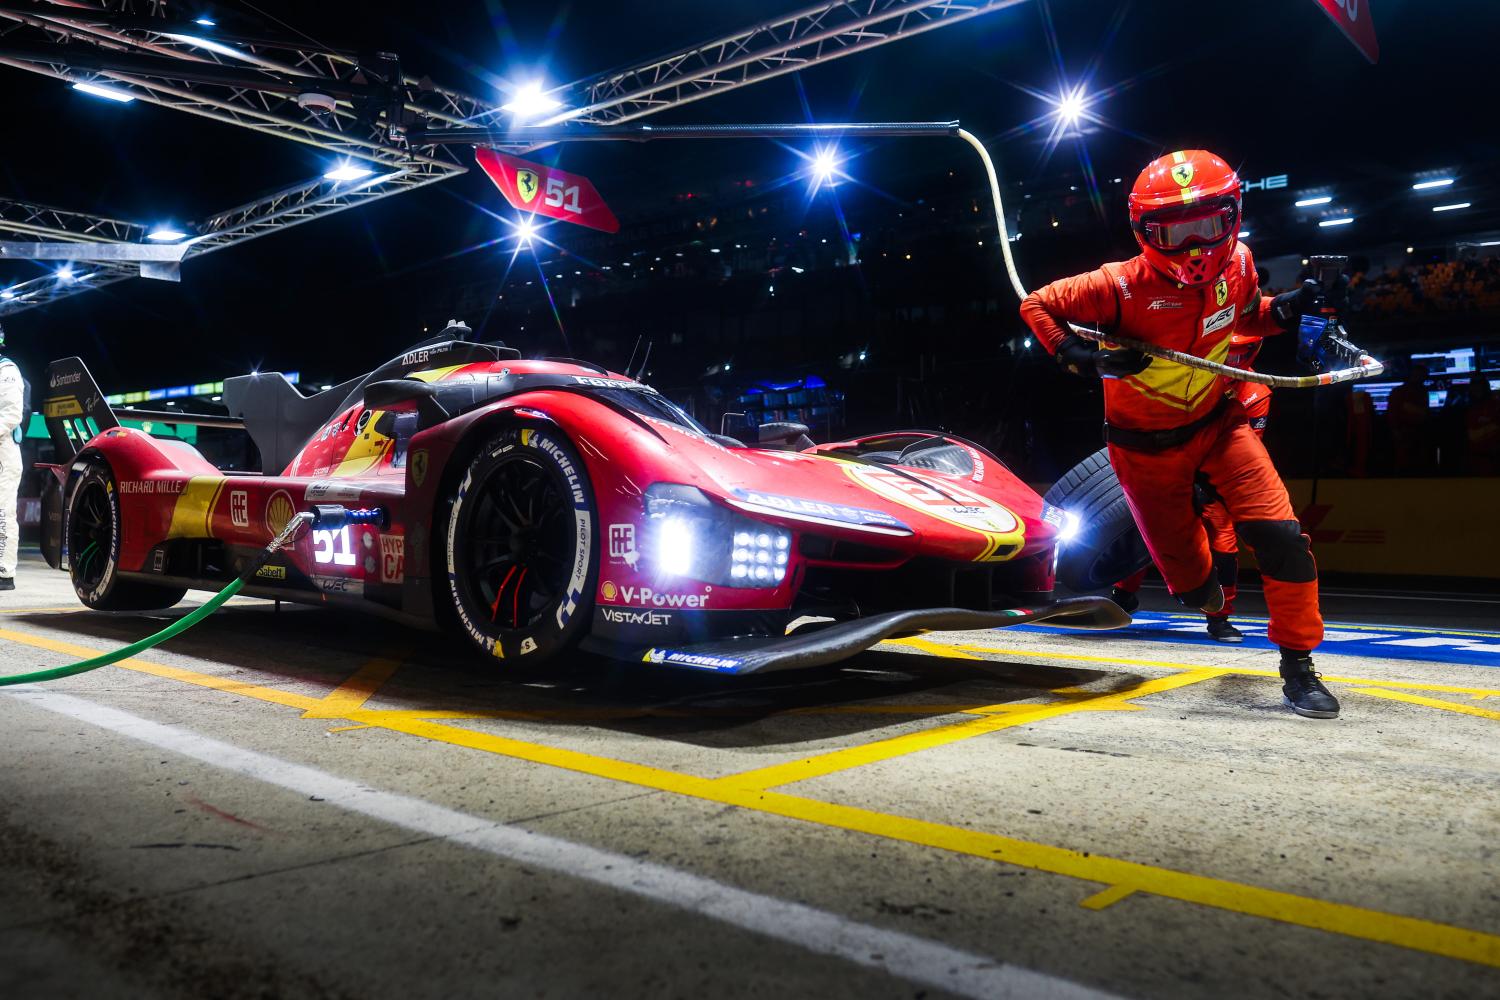 The Ferrari at Le Mans.